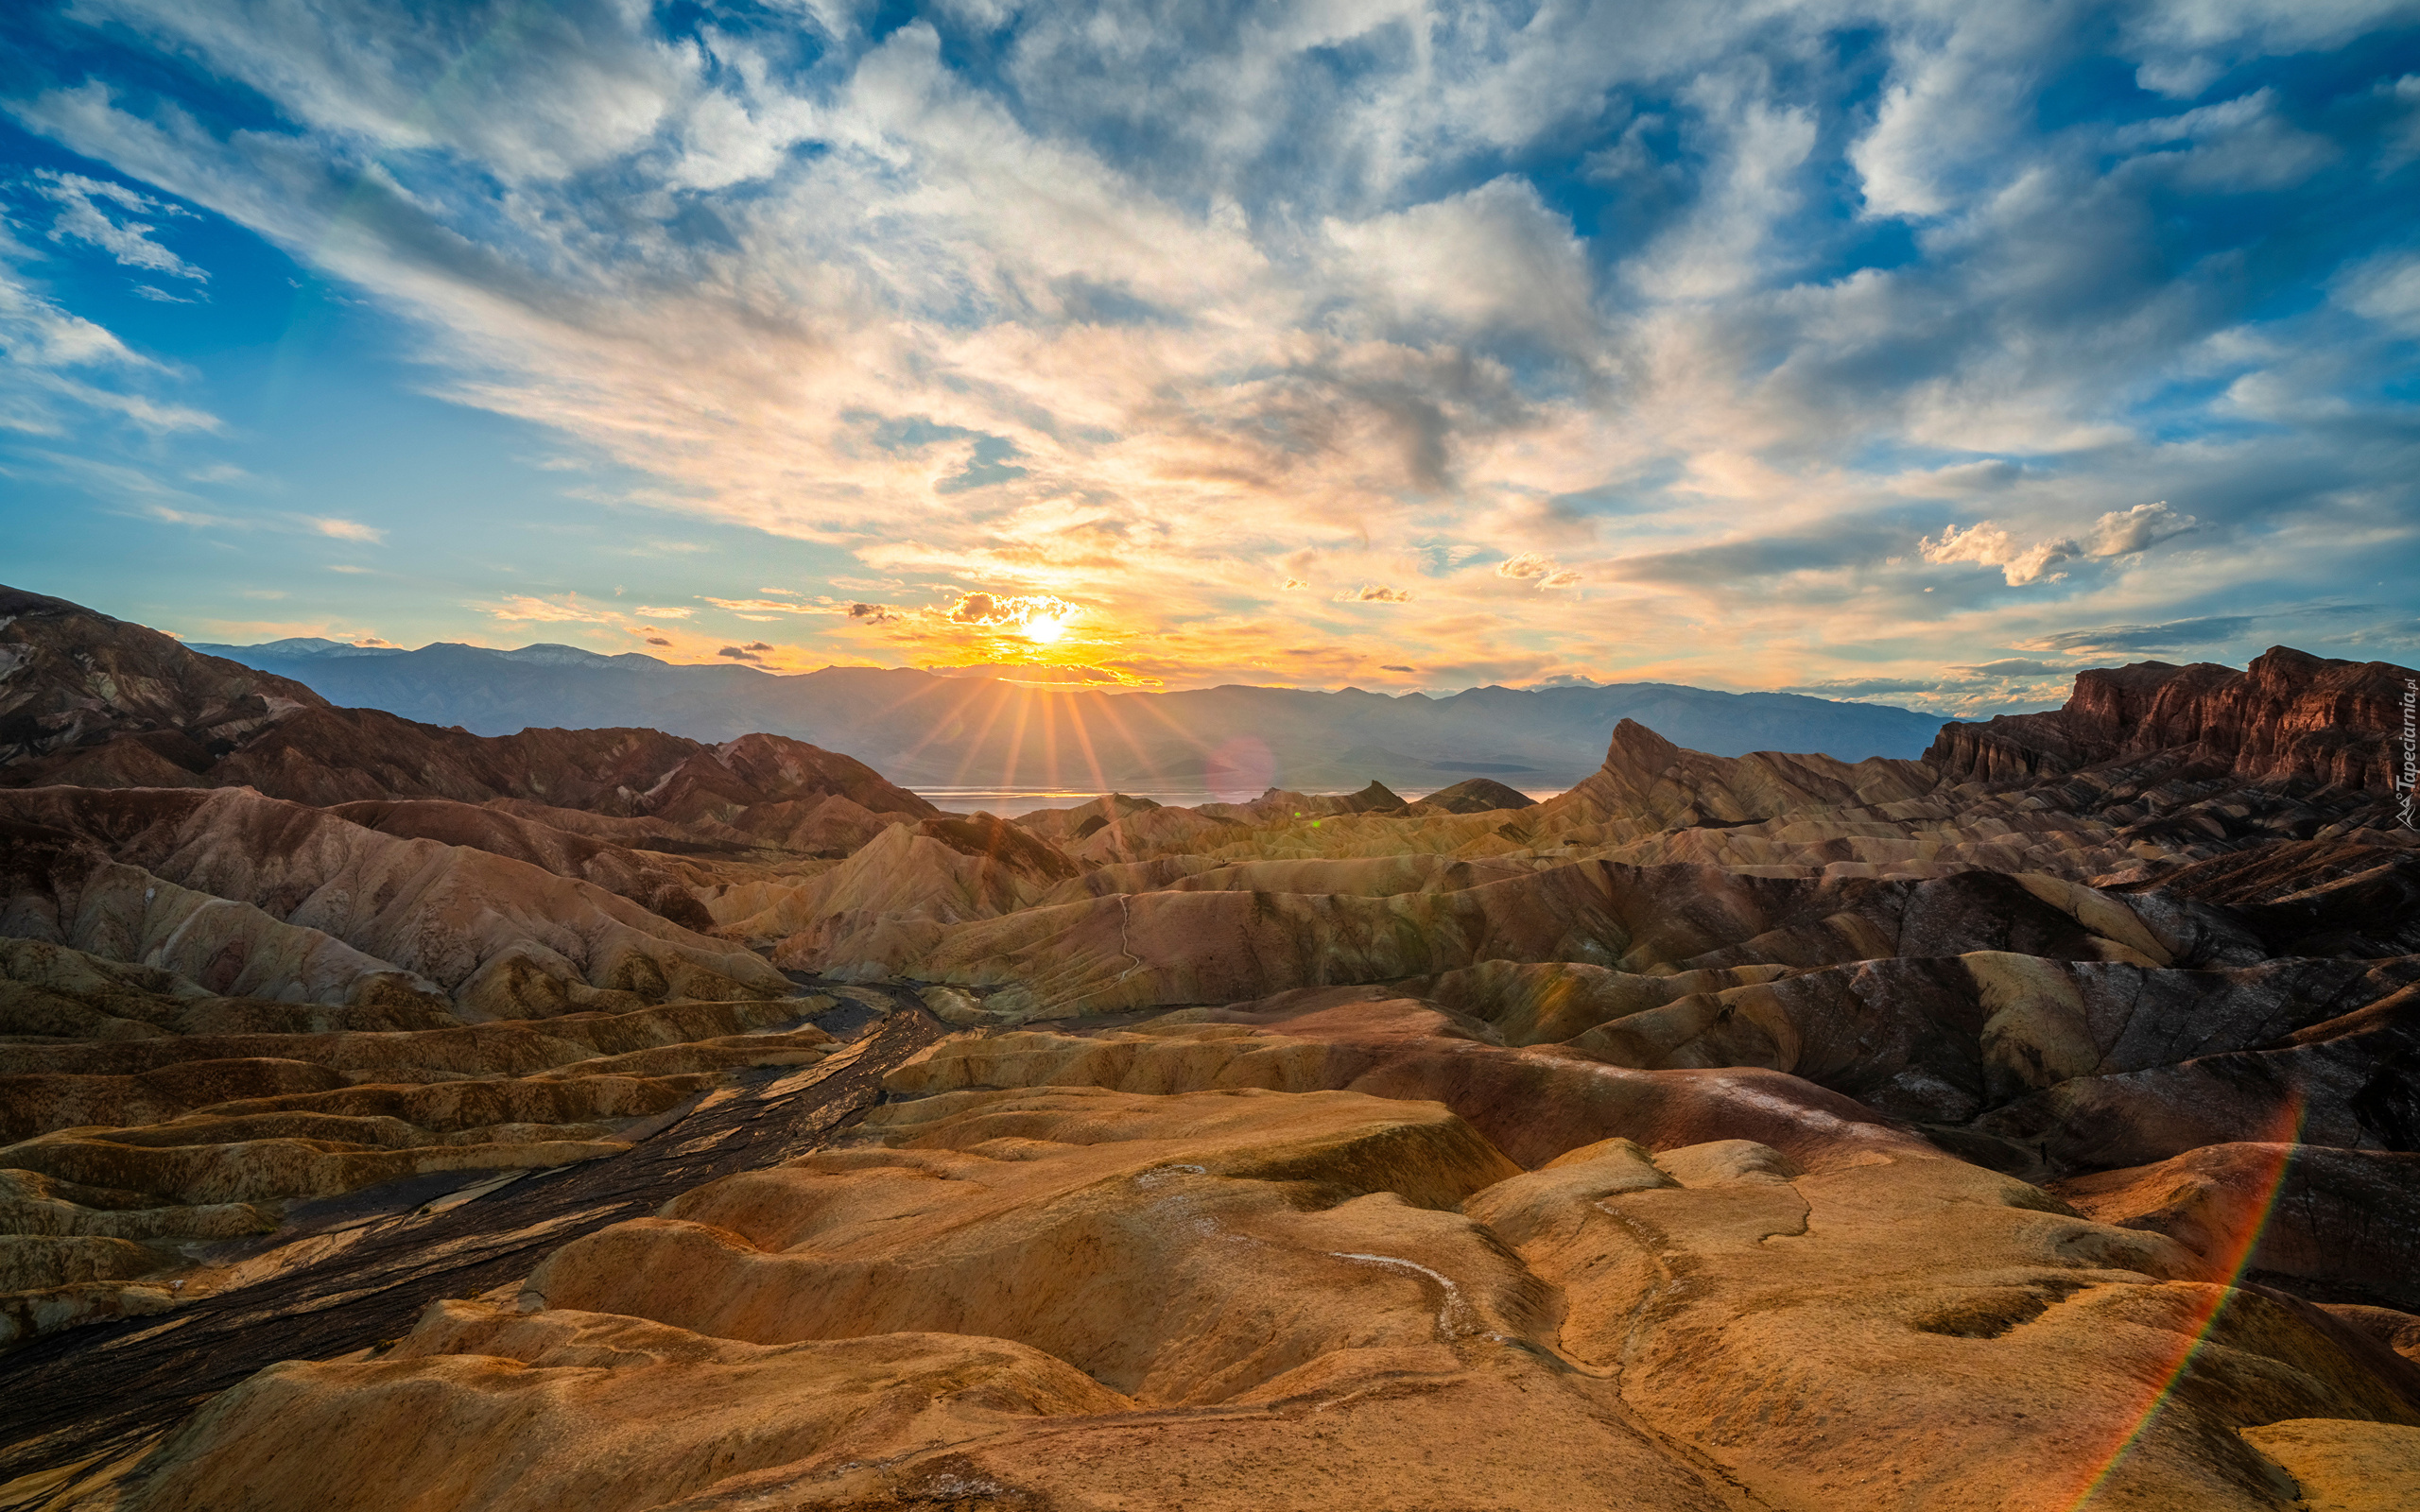 Stany Zjednoczone, Kalifornia, Góry, Skały, Zachód słońca, Promienie, Park Narodowy Death Valley